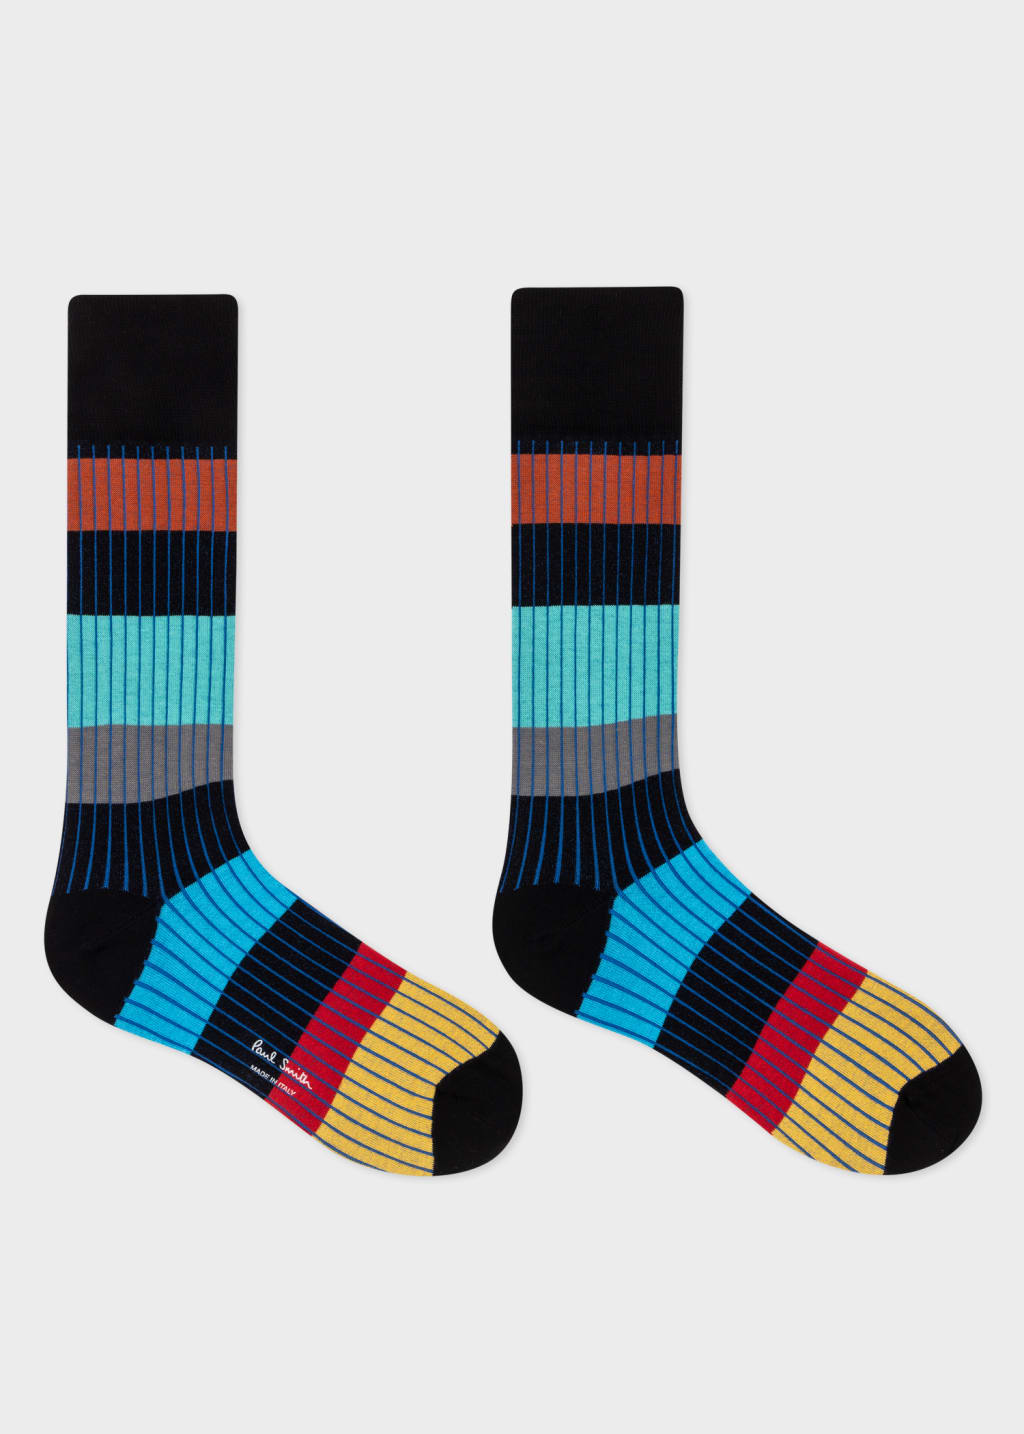 Pair View - Black Multi Colour Block Stripe Socks Paul Smith